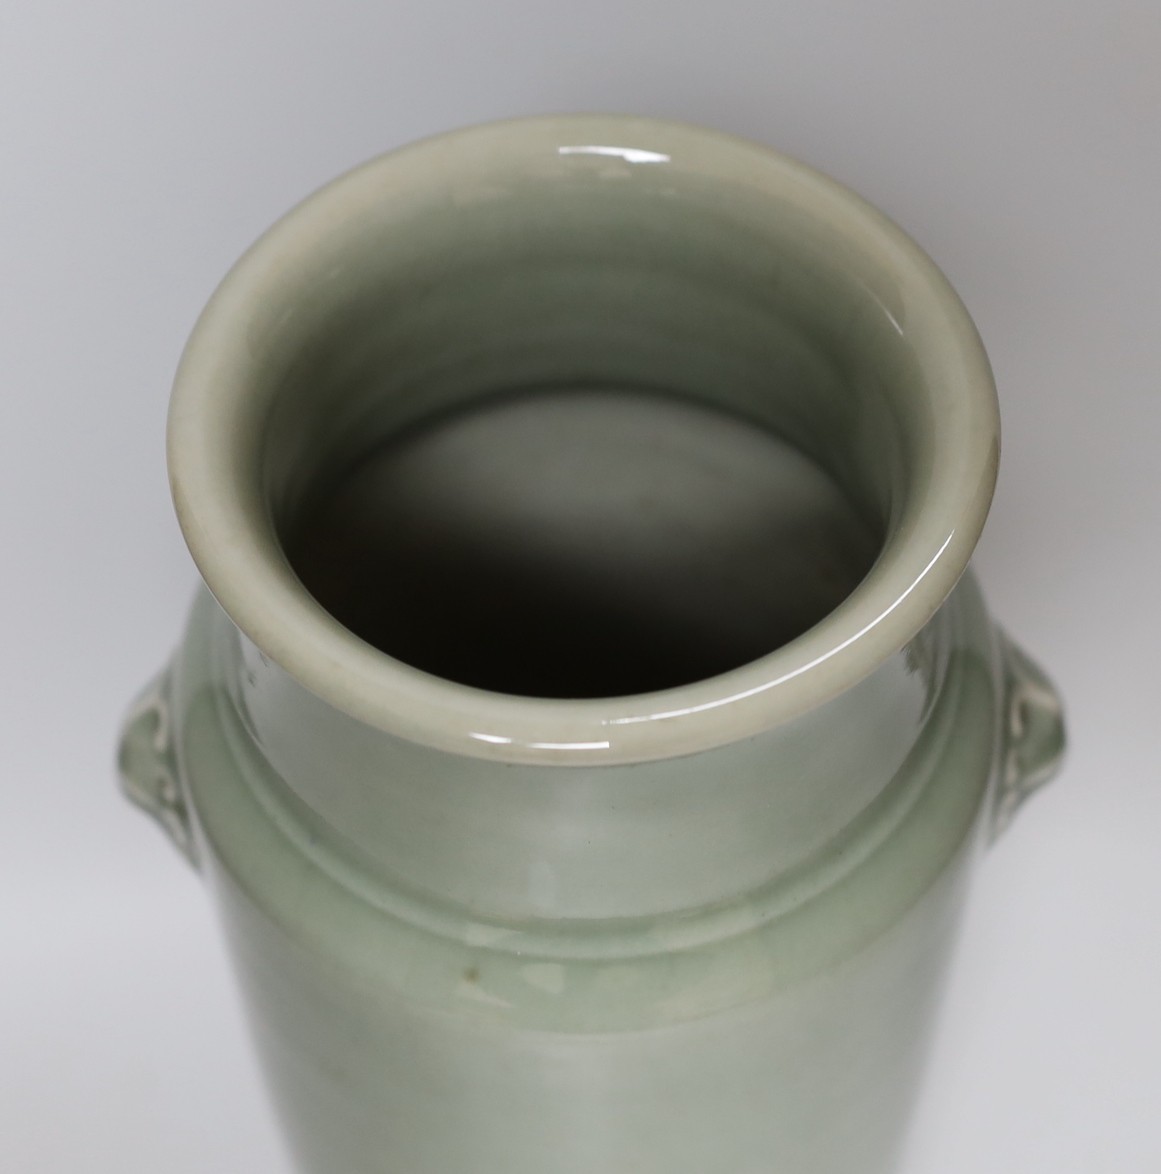 A Chinese celadon glazed vase, 37cms high